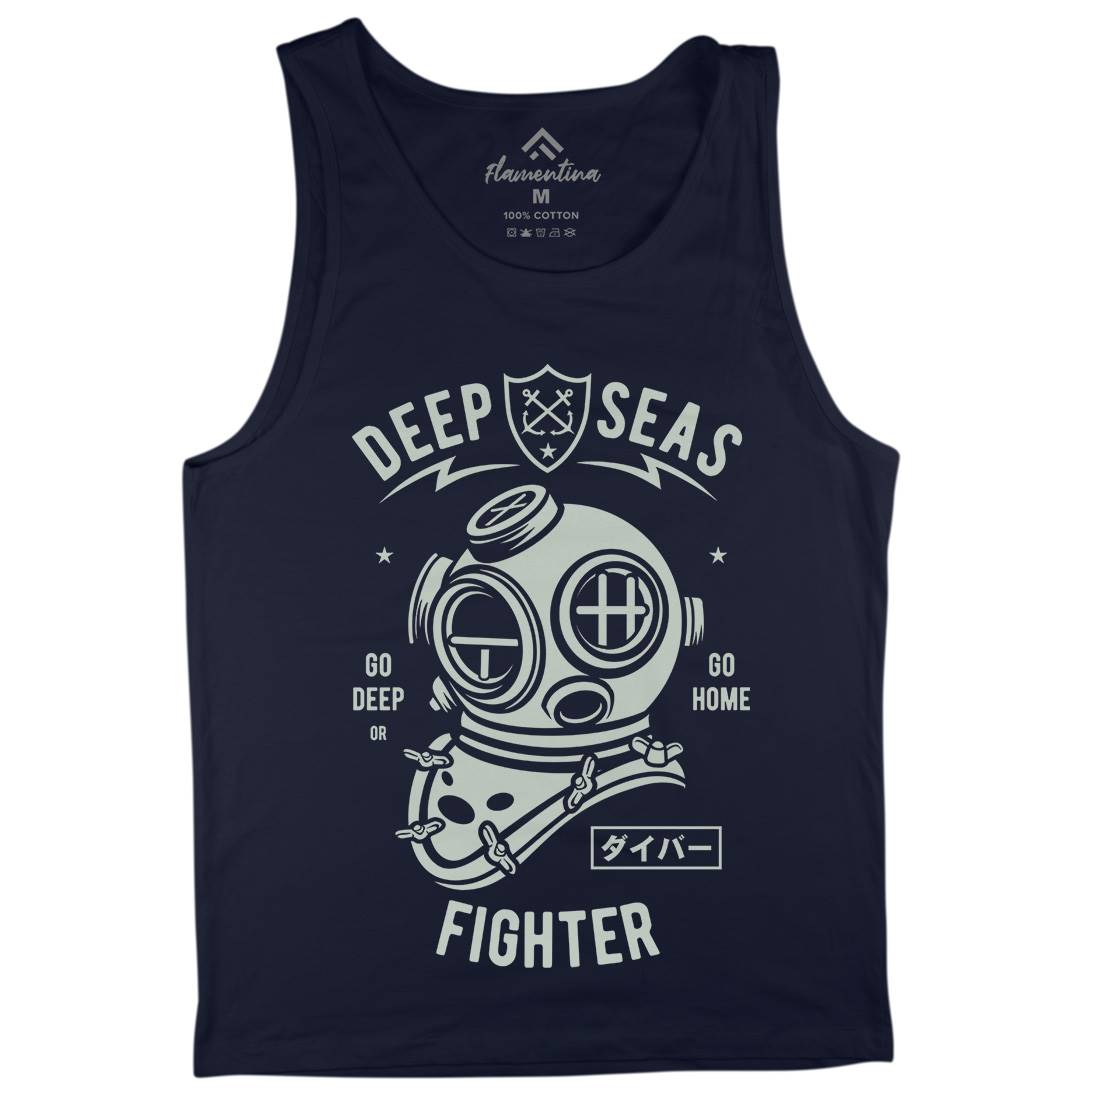 Deep Seas Fighter Mens Tank Top Vest Navy A223